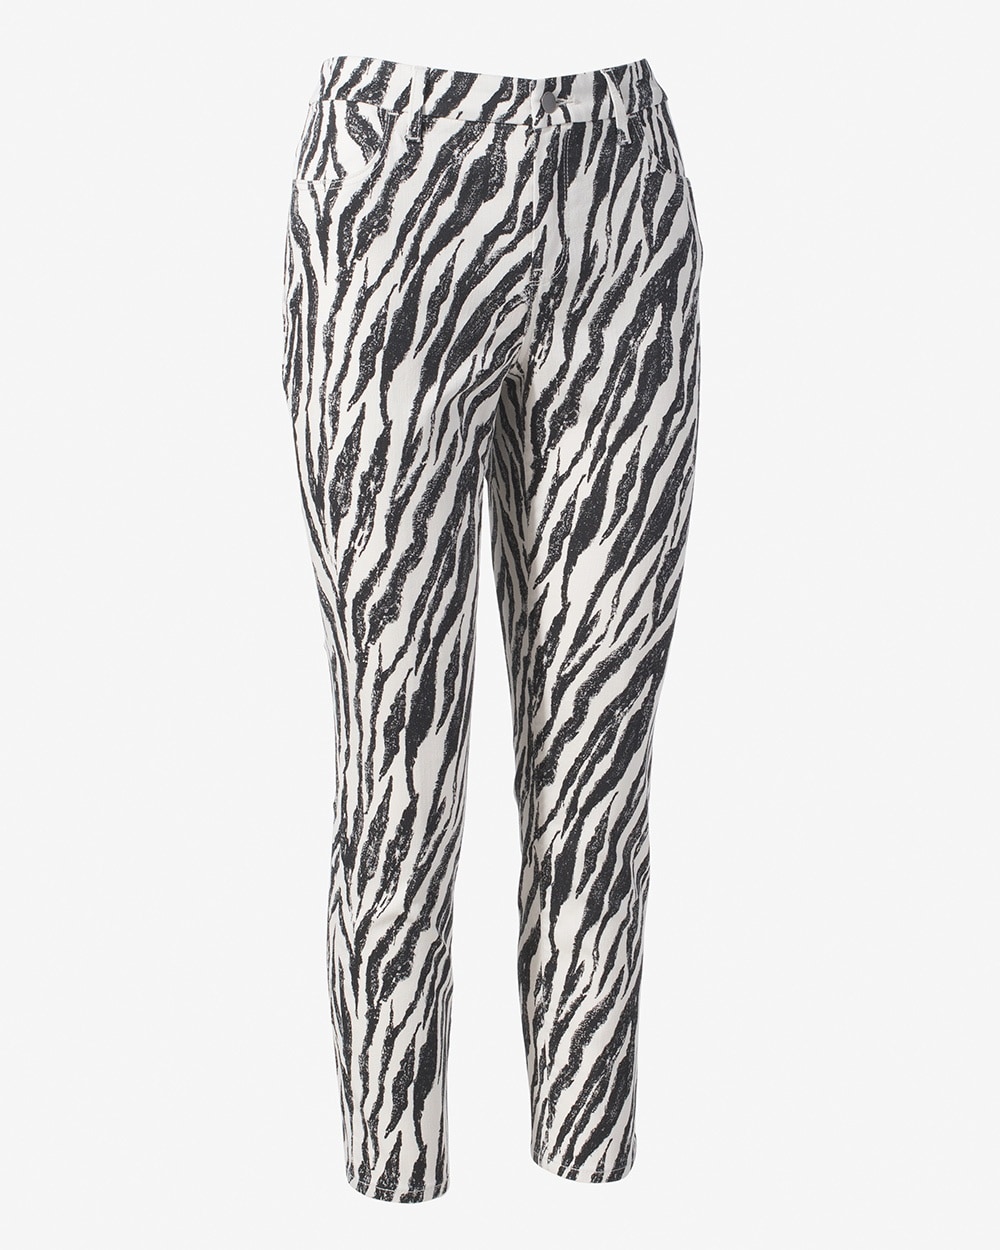 Artisanal Zebra Girlfriend Ankle Jeans